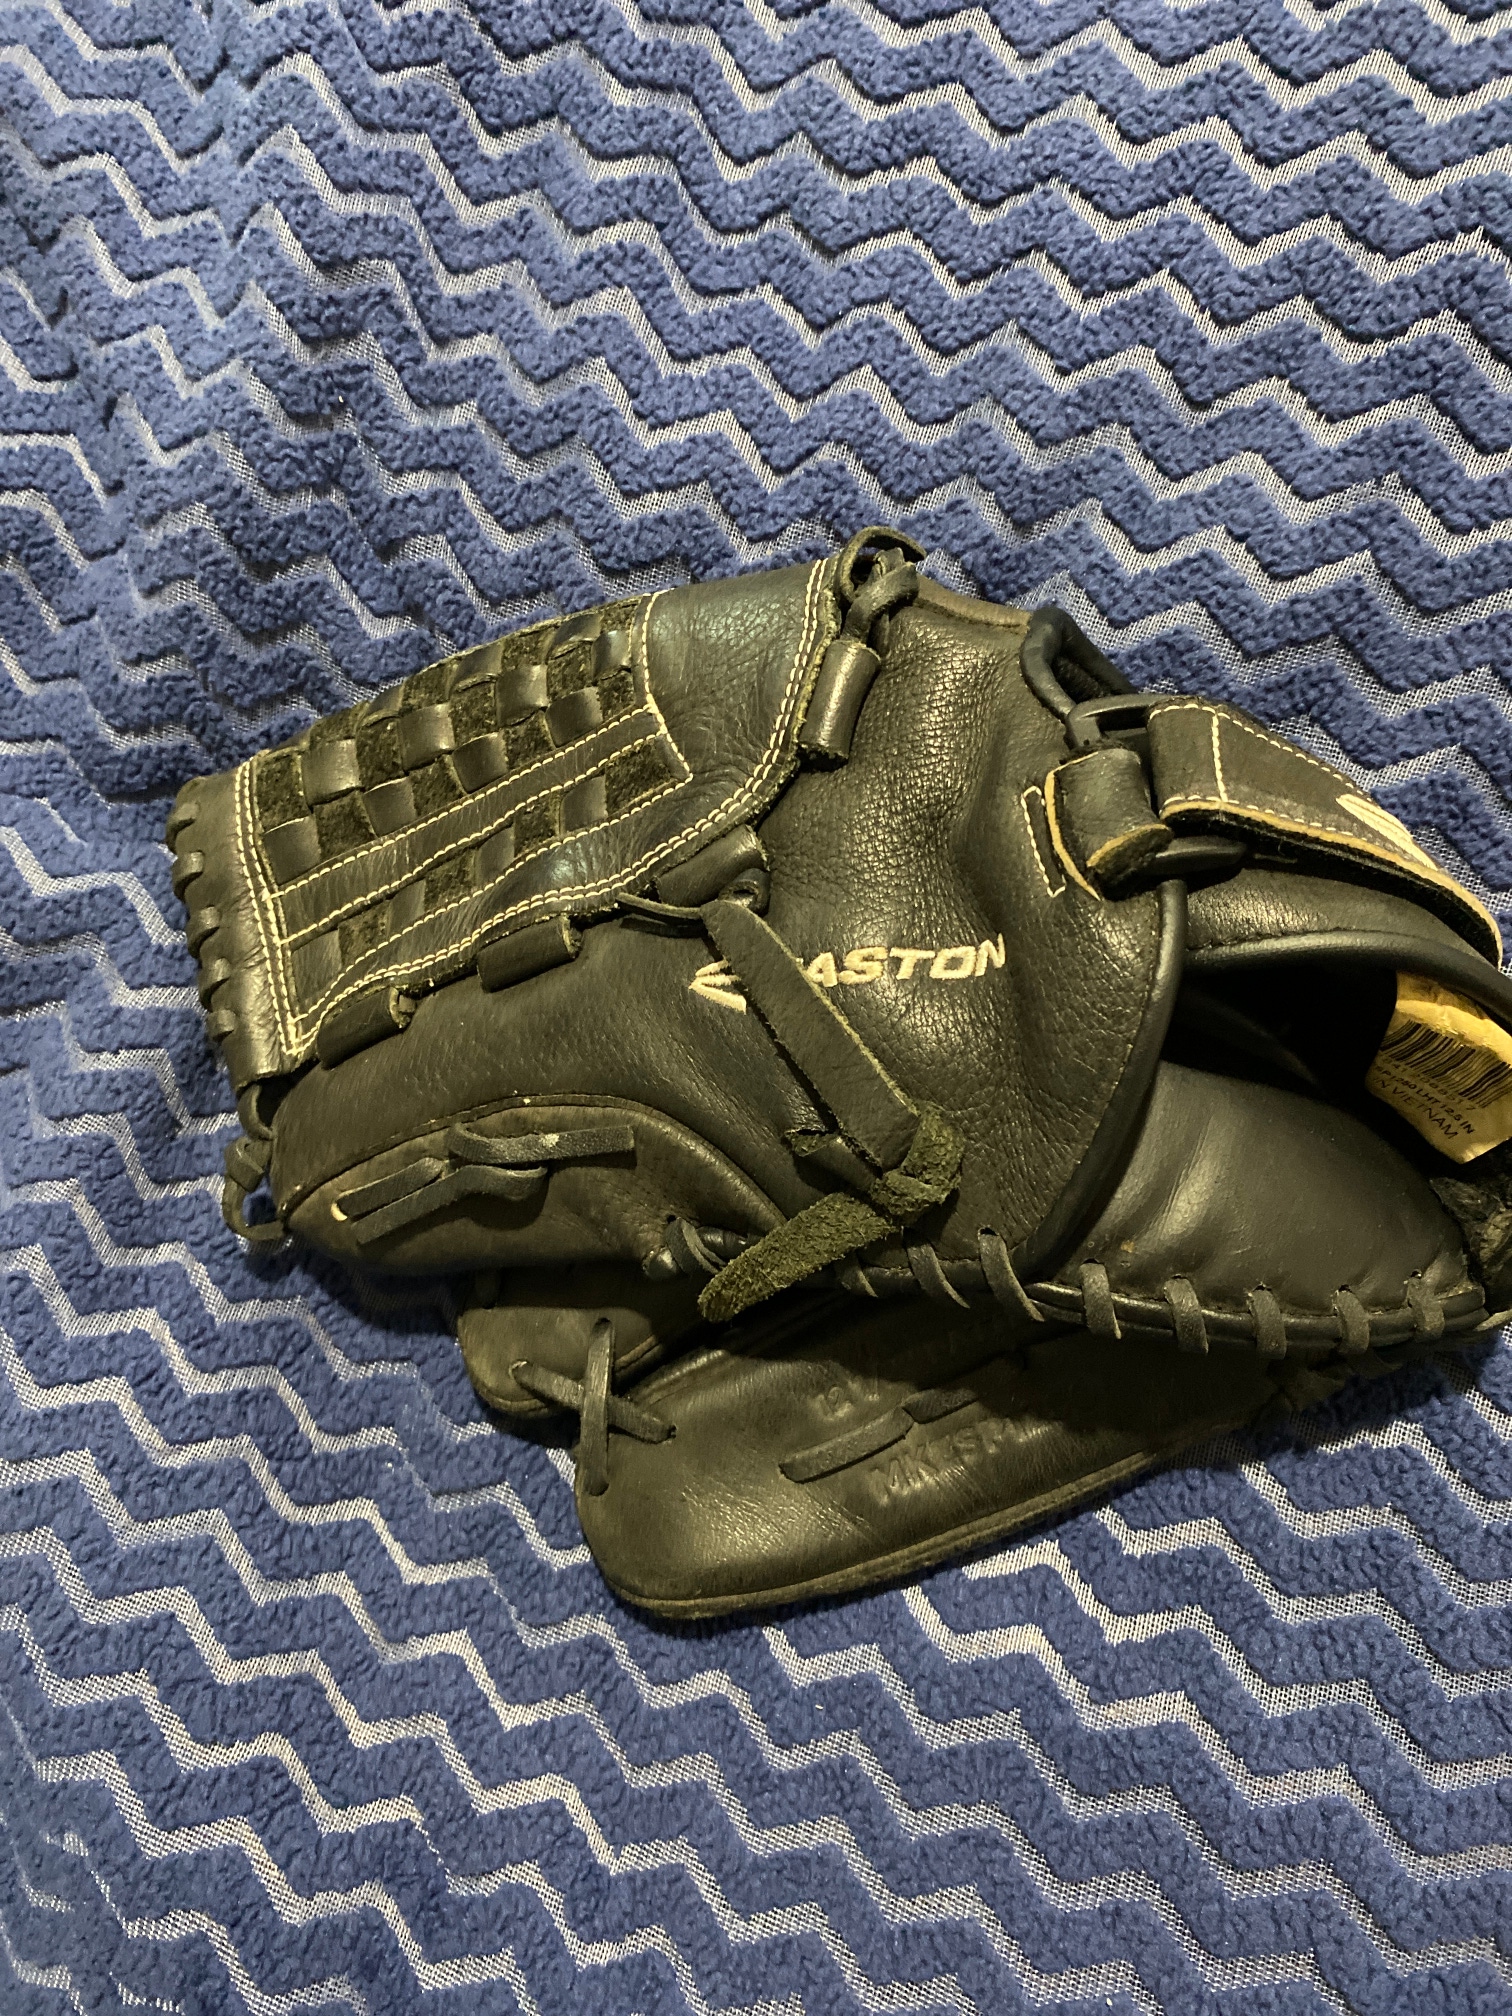 Used 2010 Easton Outfield Mako Baseball Glove 12.5"